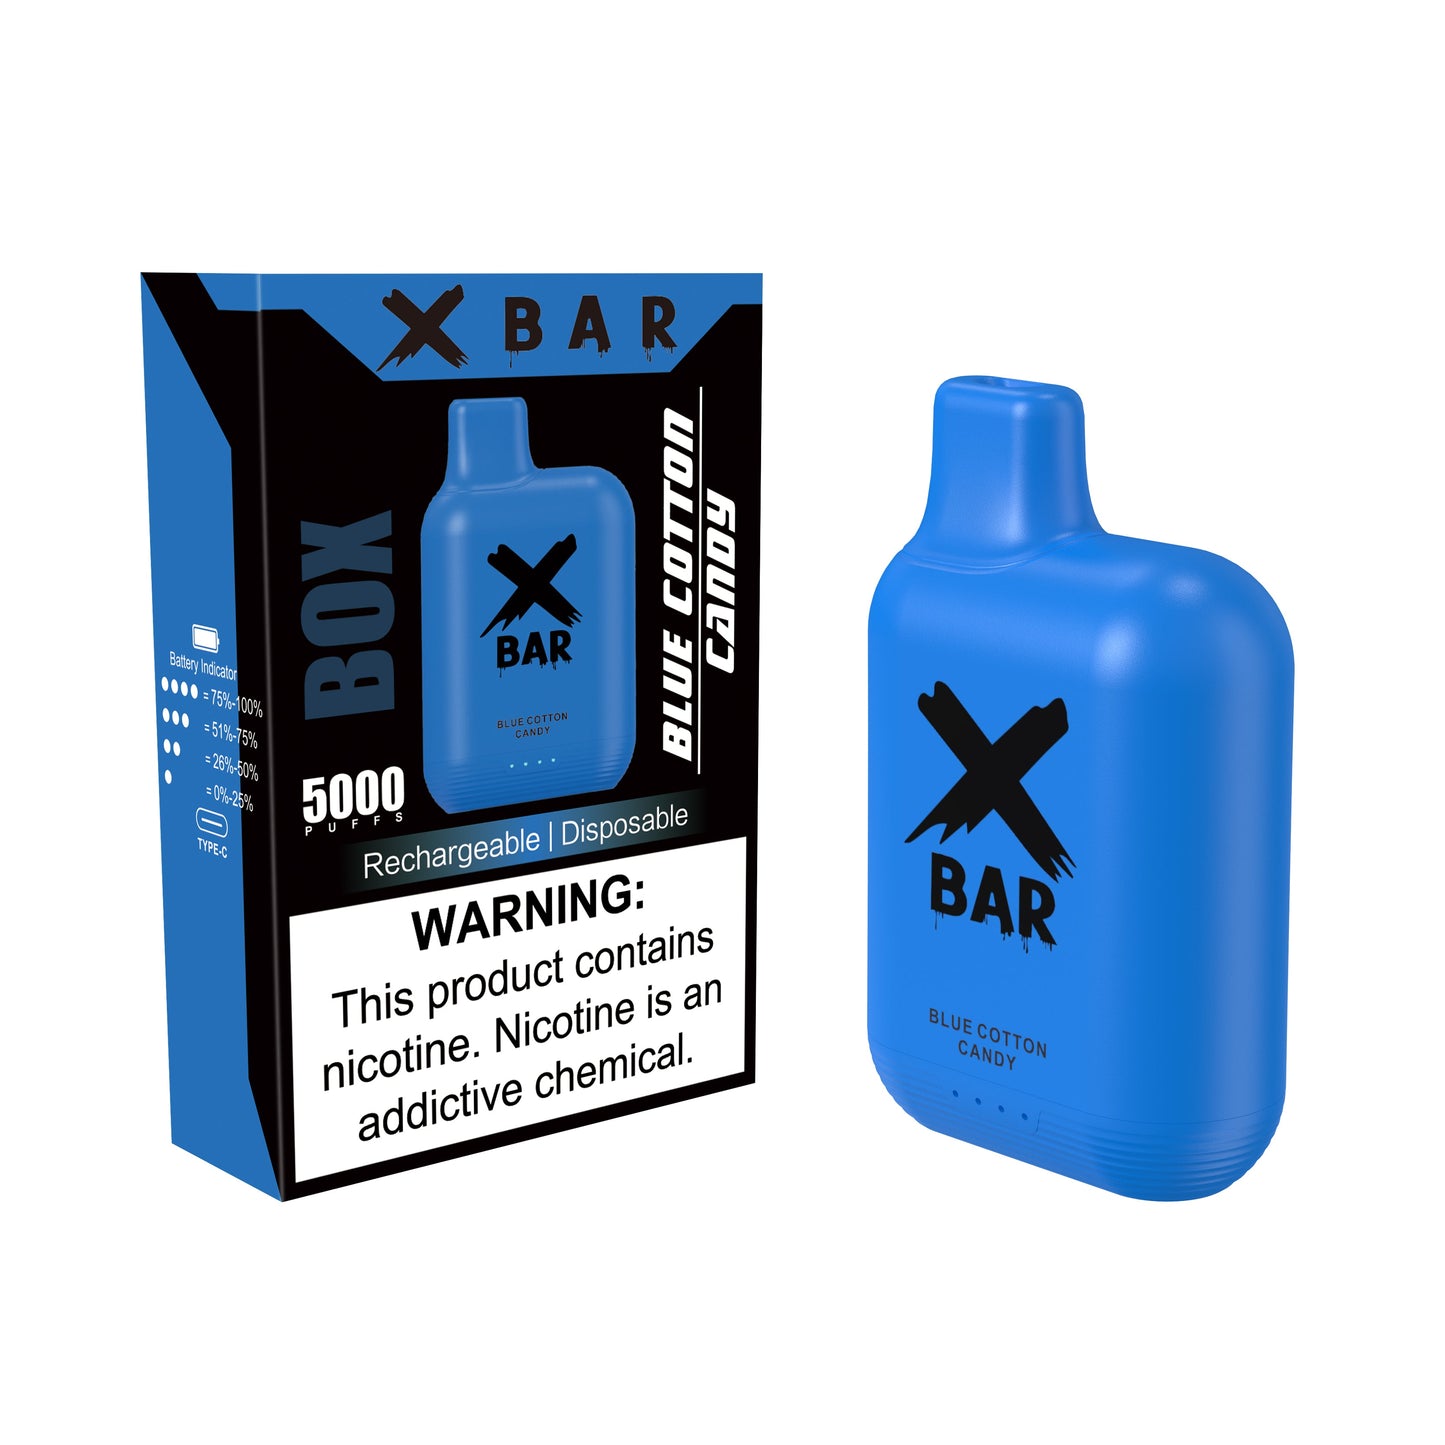 Xbar Vape’s delightful 6pcs box